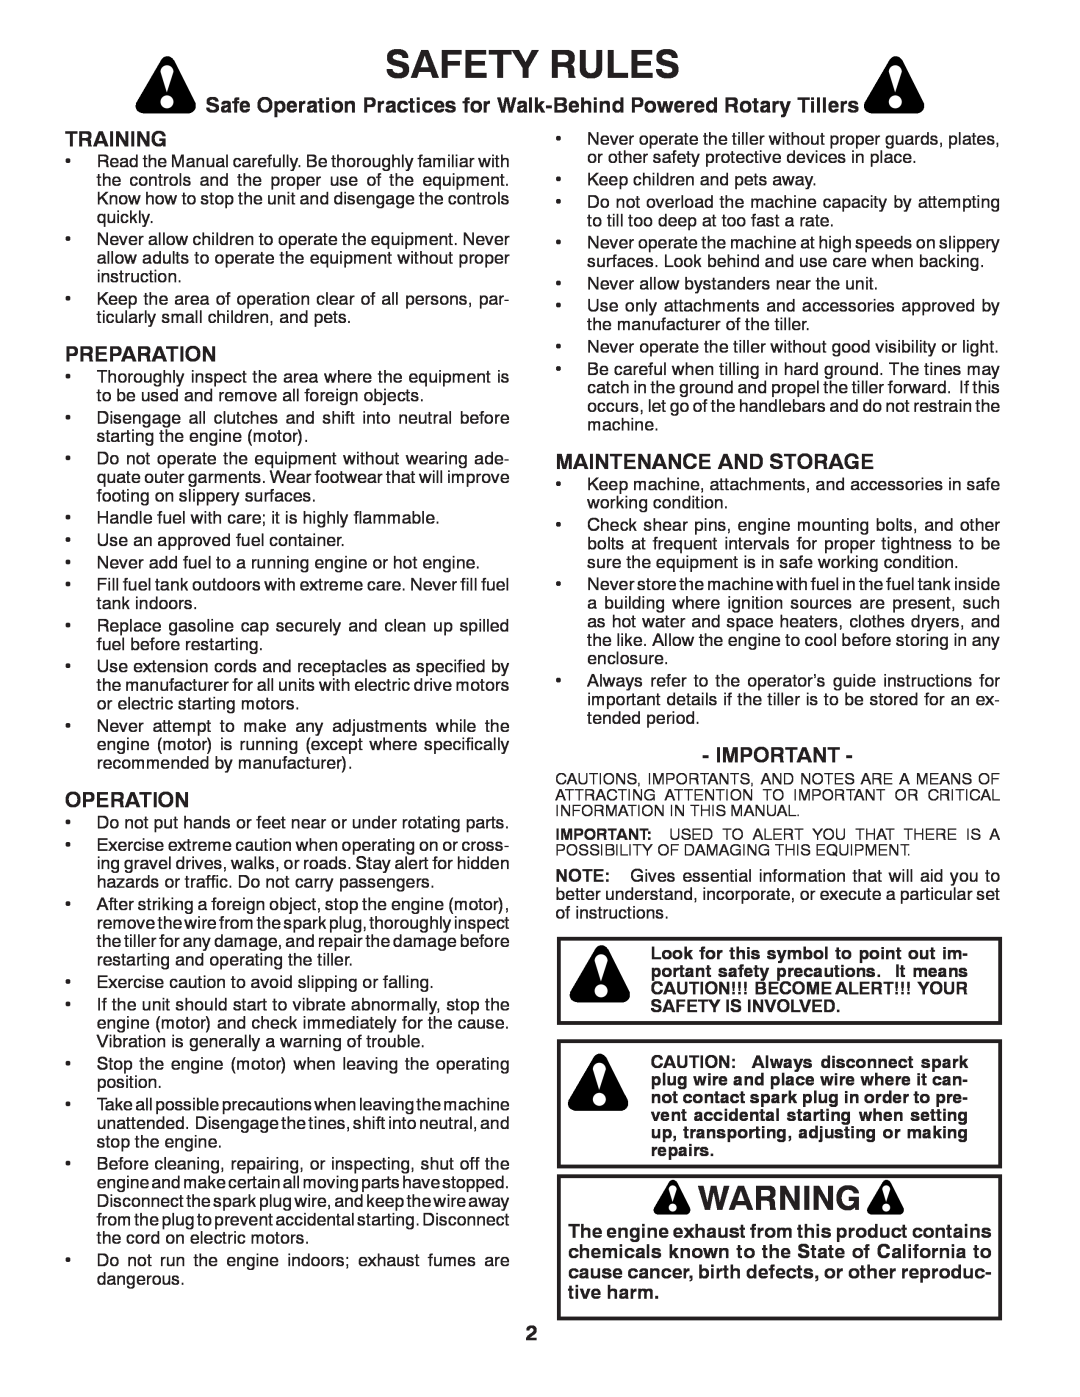 Poulan PRRT850 manual Safety Rules, Training, Preparation, Operation, Maintenance And Storage 